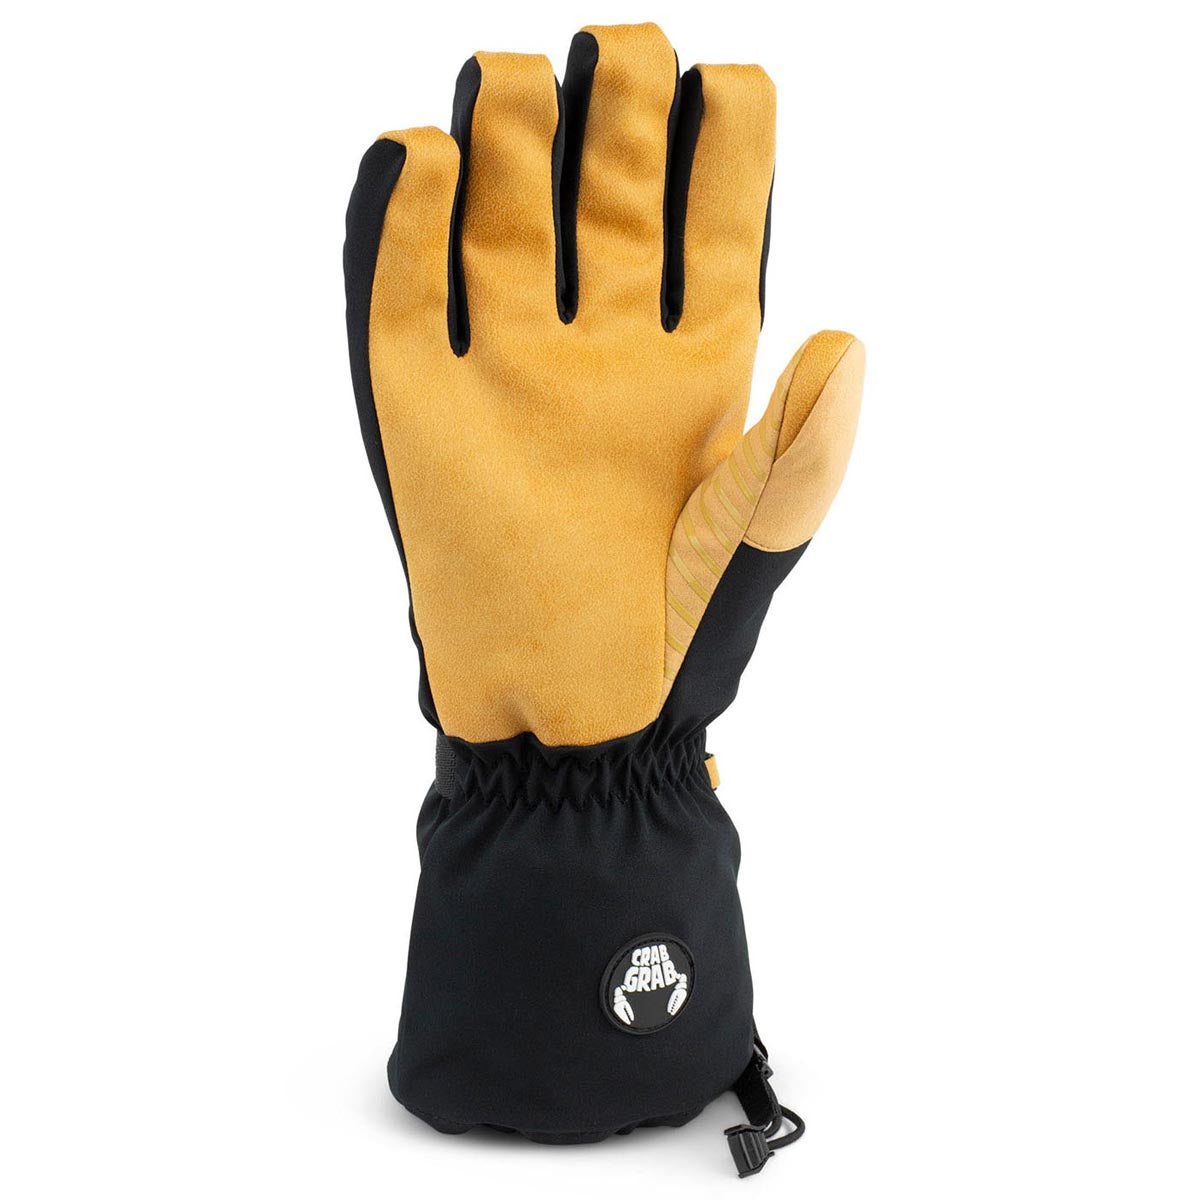 Crab Grab Cinch Snowboard Gloves - Black/Tan image 2